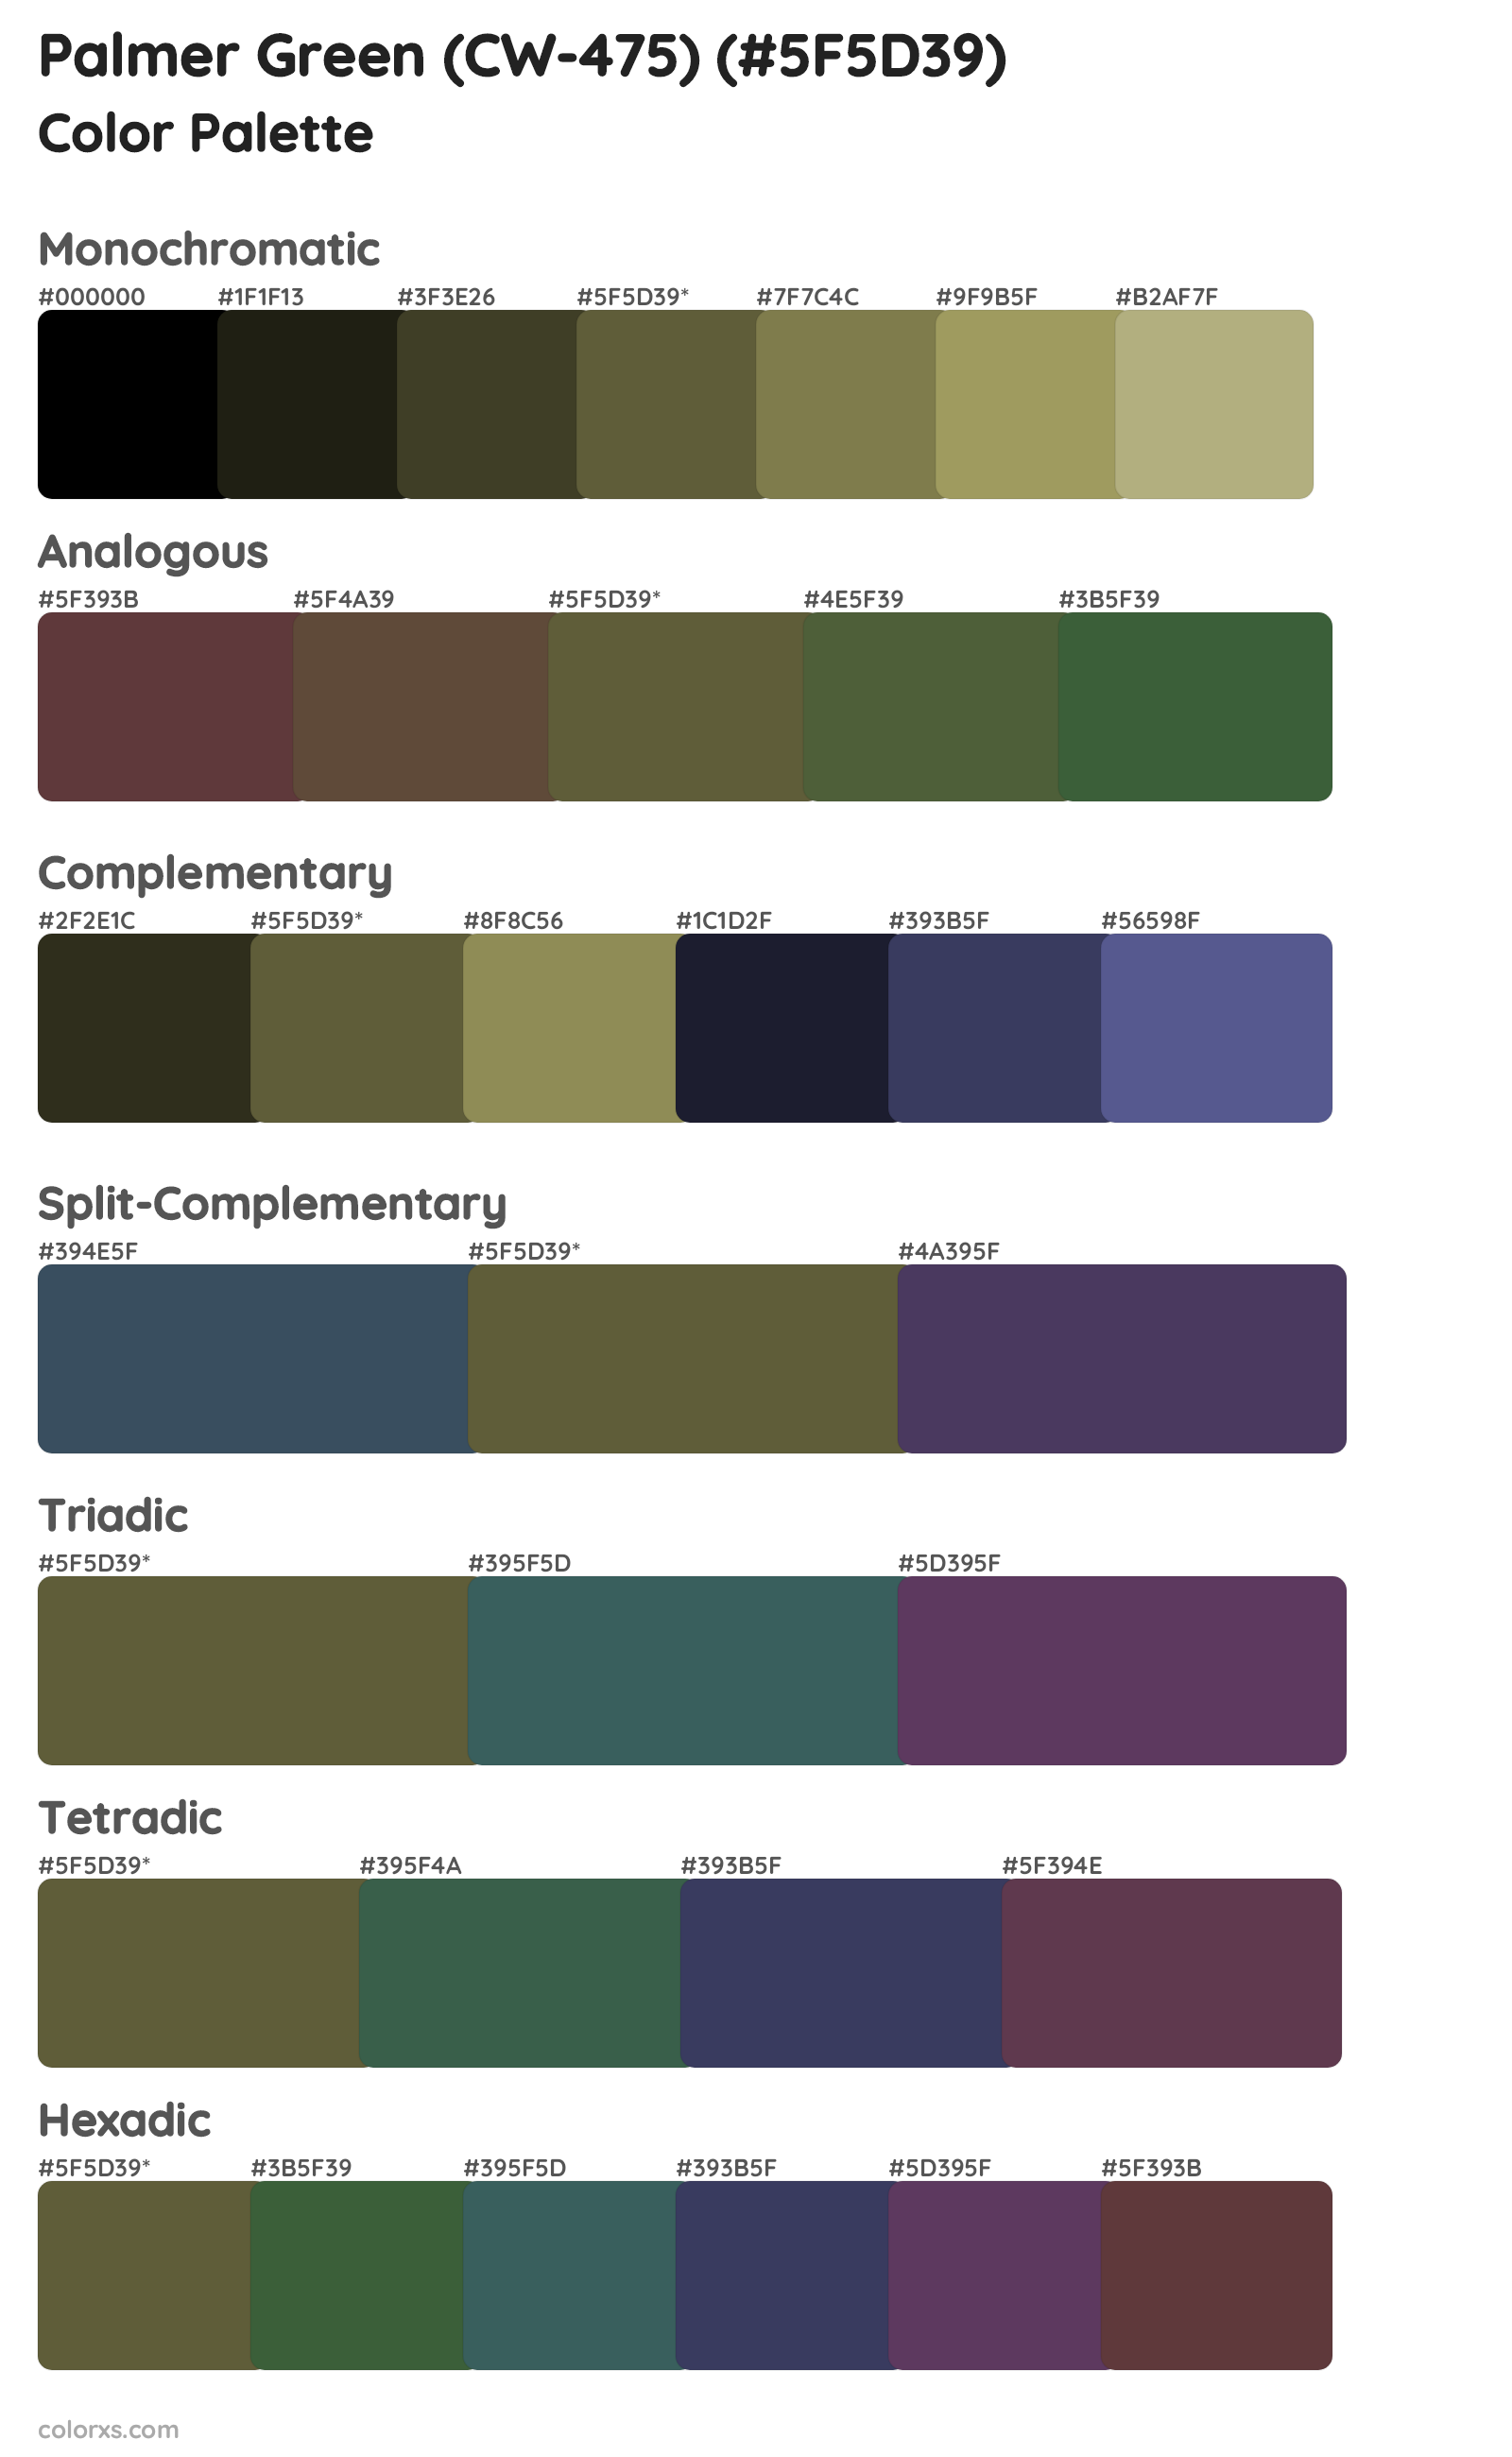 Palmer Green (CW-475) Color Scheme Palettes